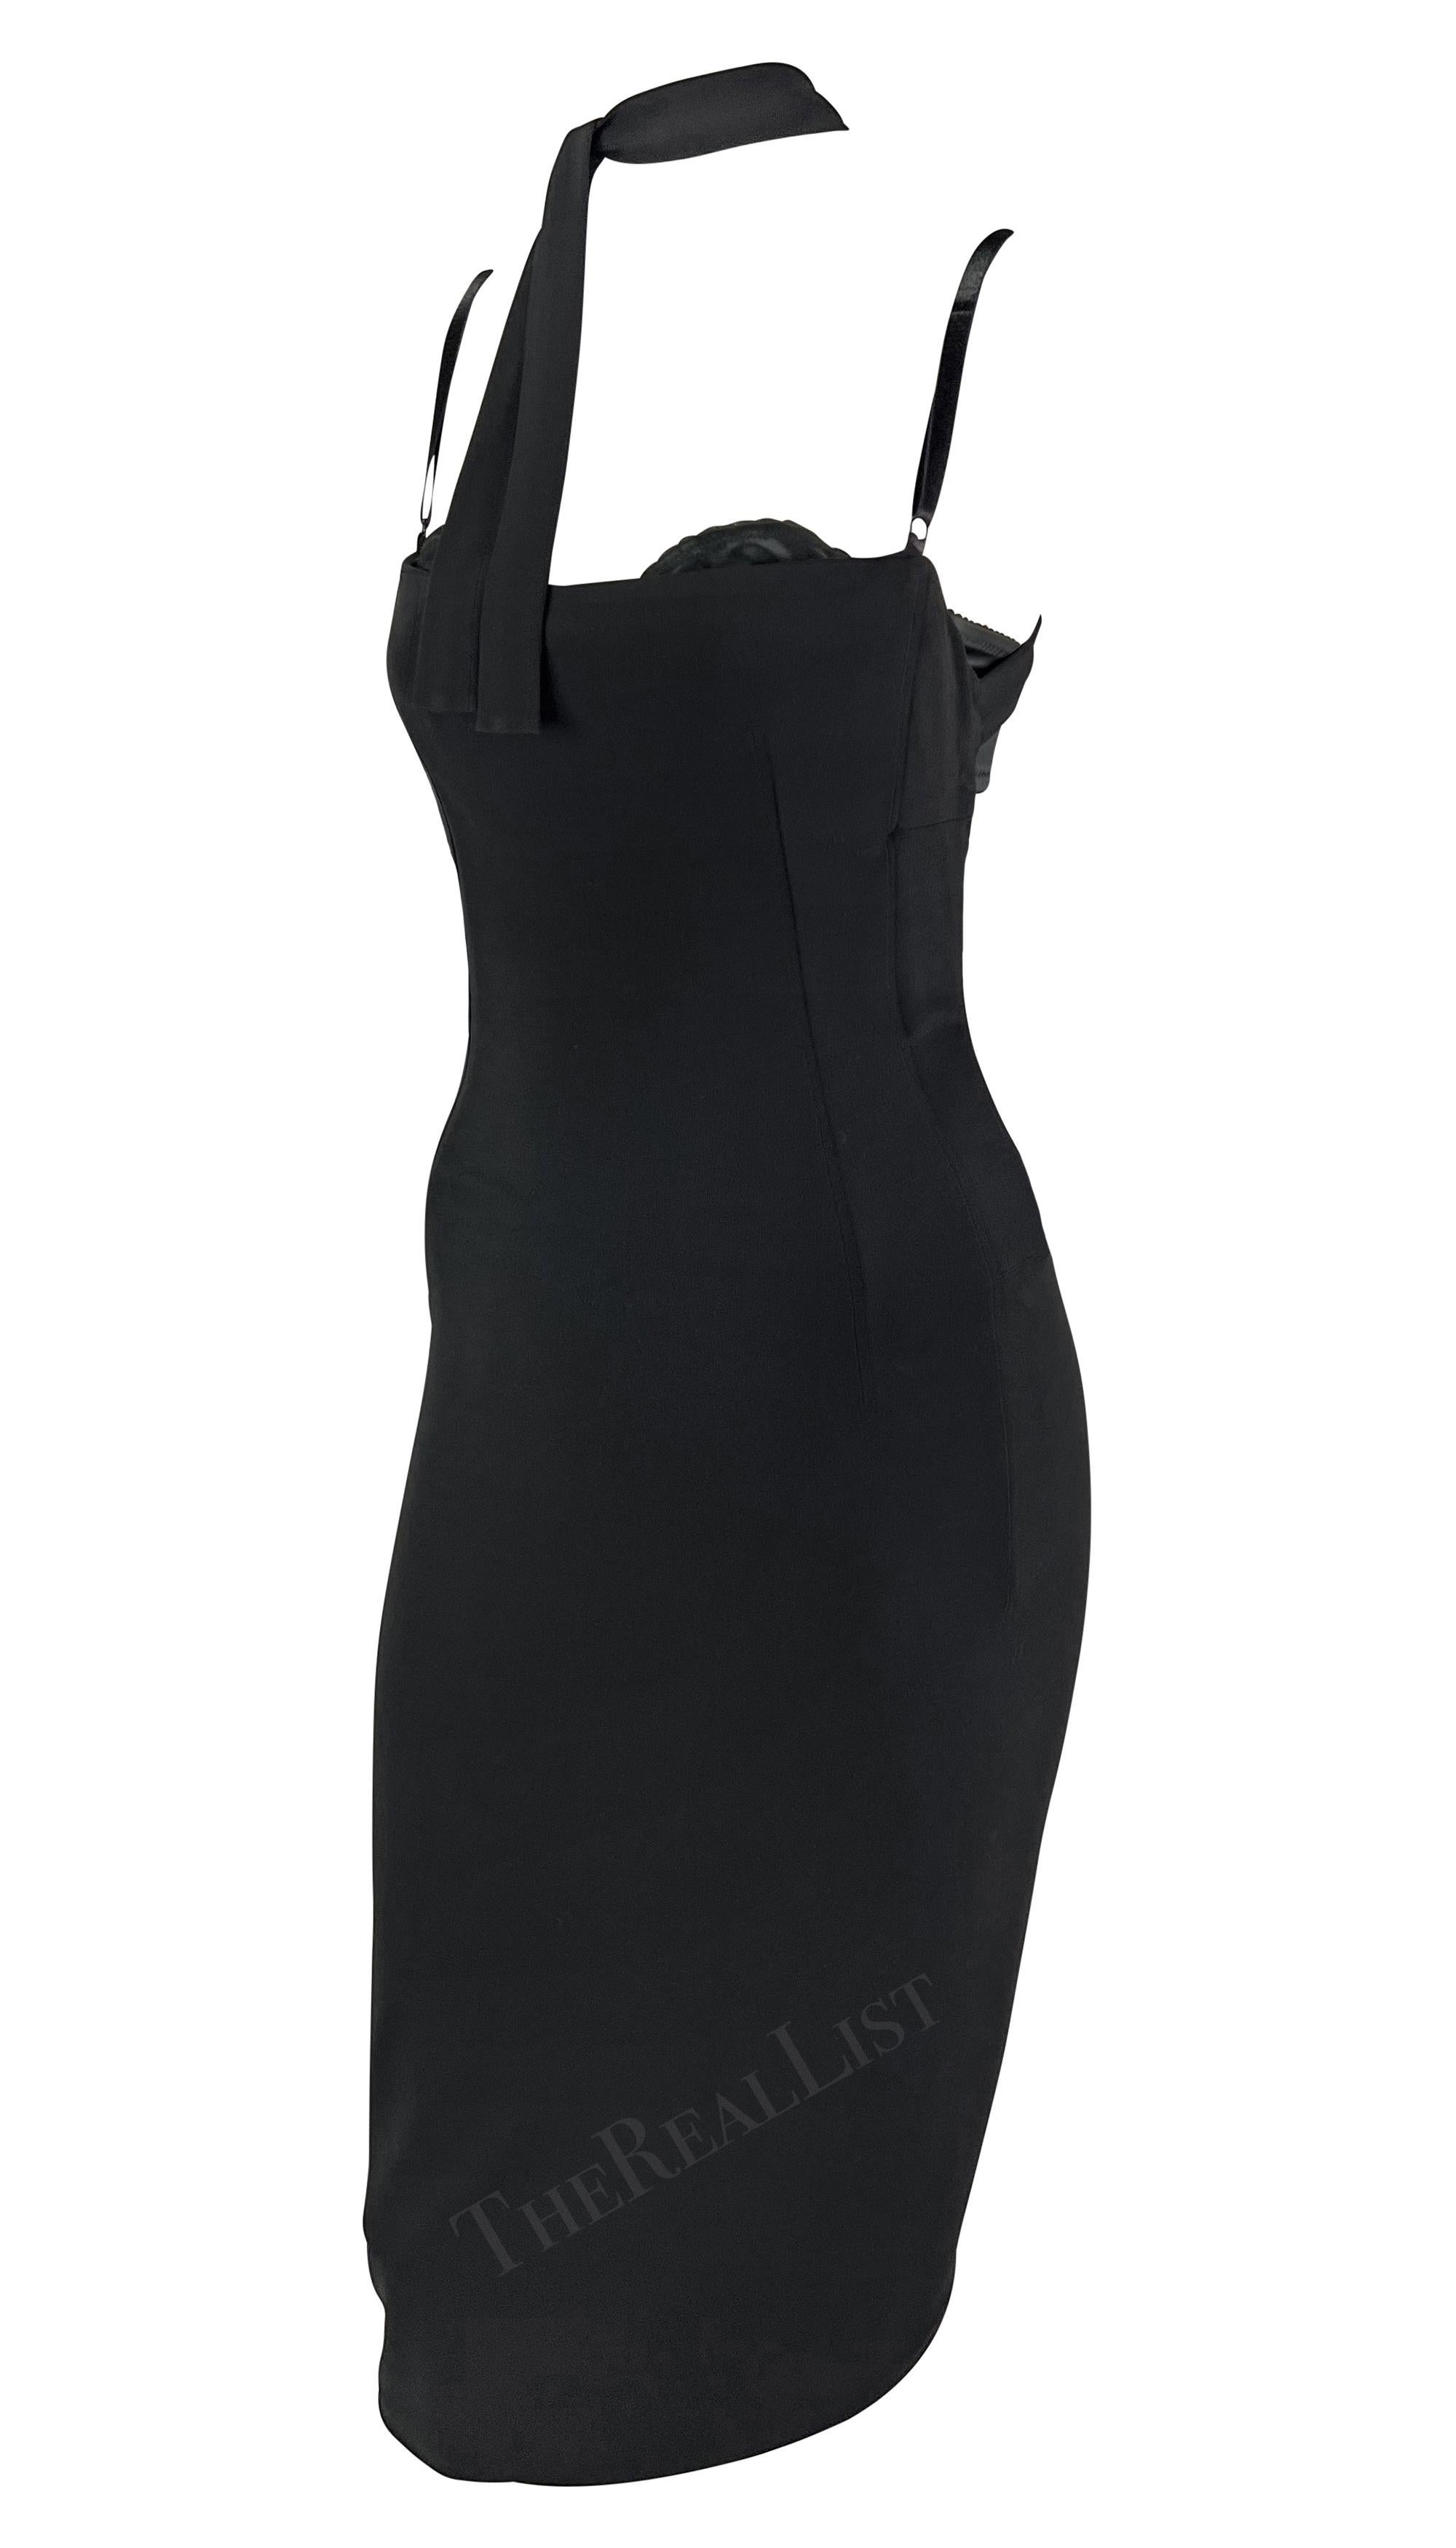 S/S 2001 Dolce & Gabbana Black Bodycon Strap Backless Runway Dress For Sale 6